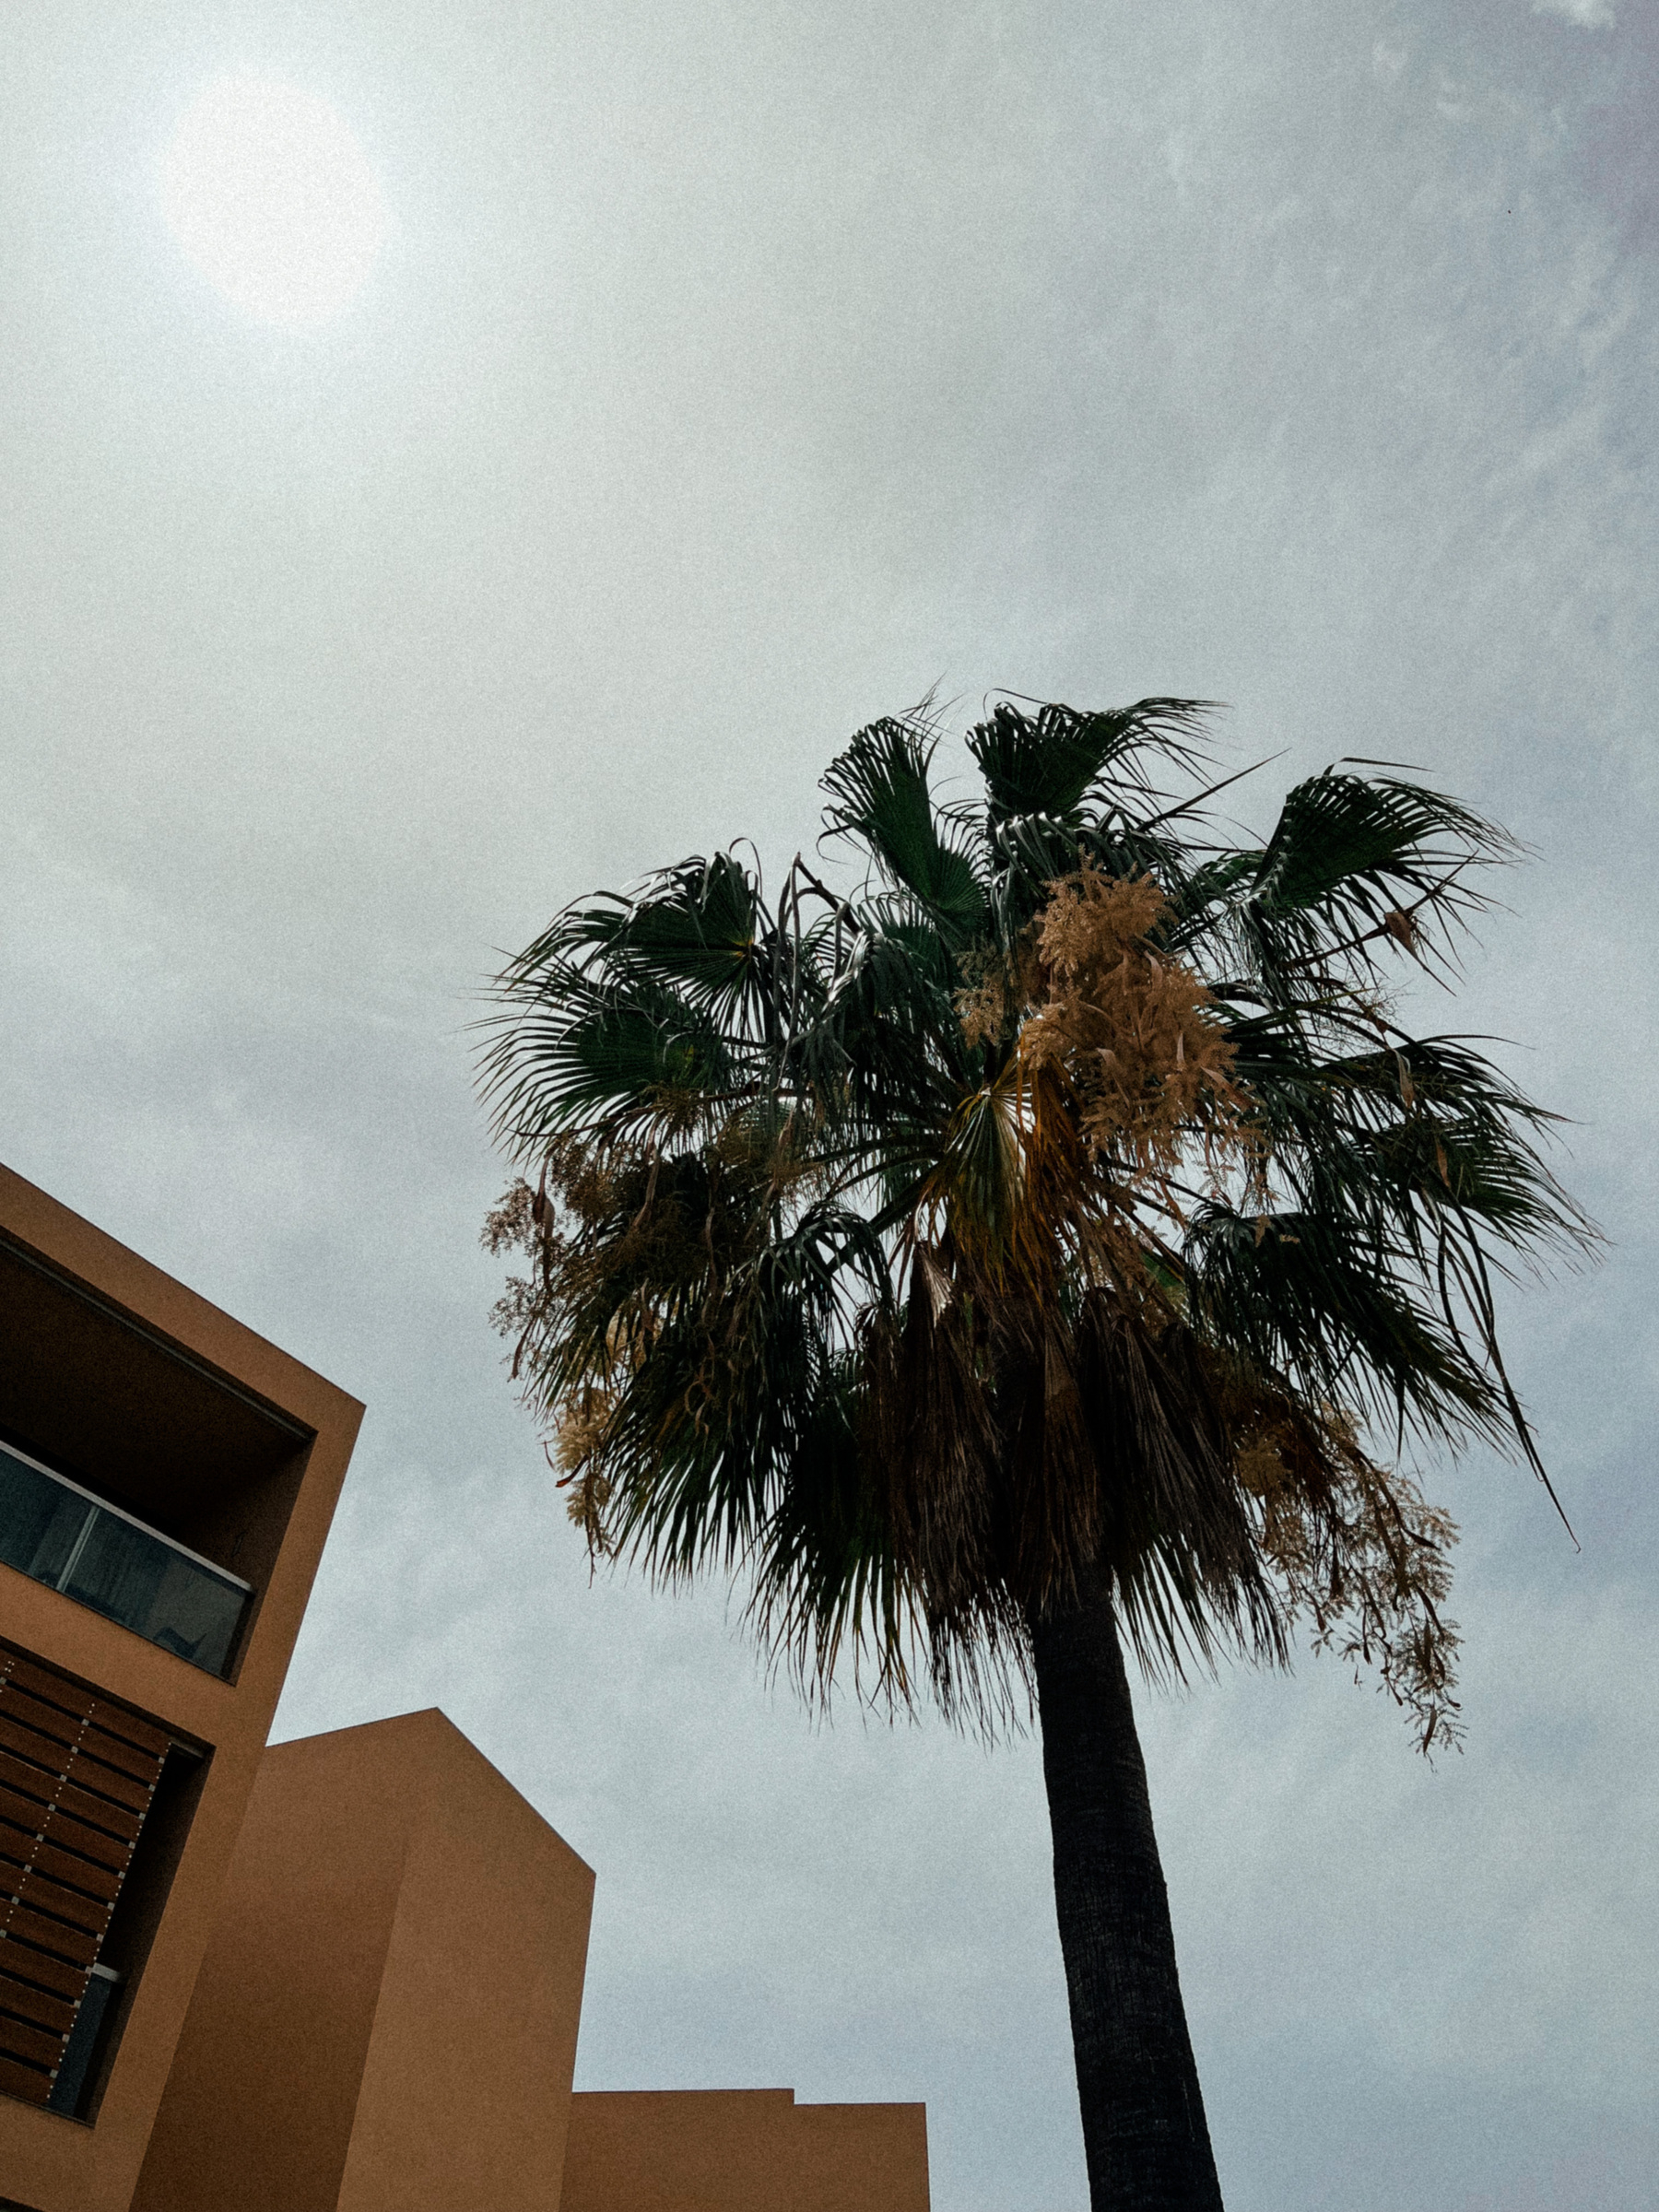 A palm tree next to a building. 